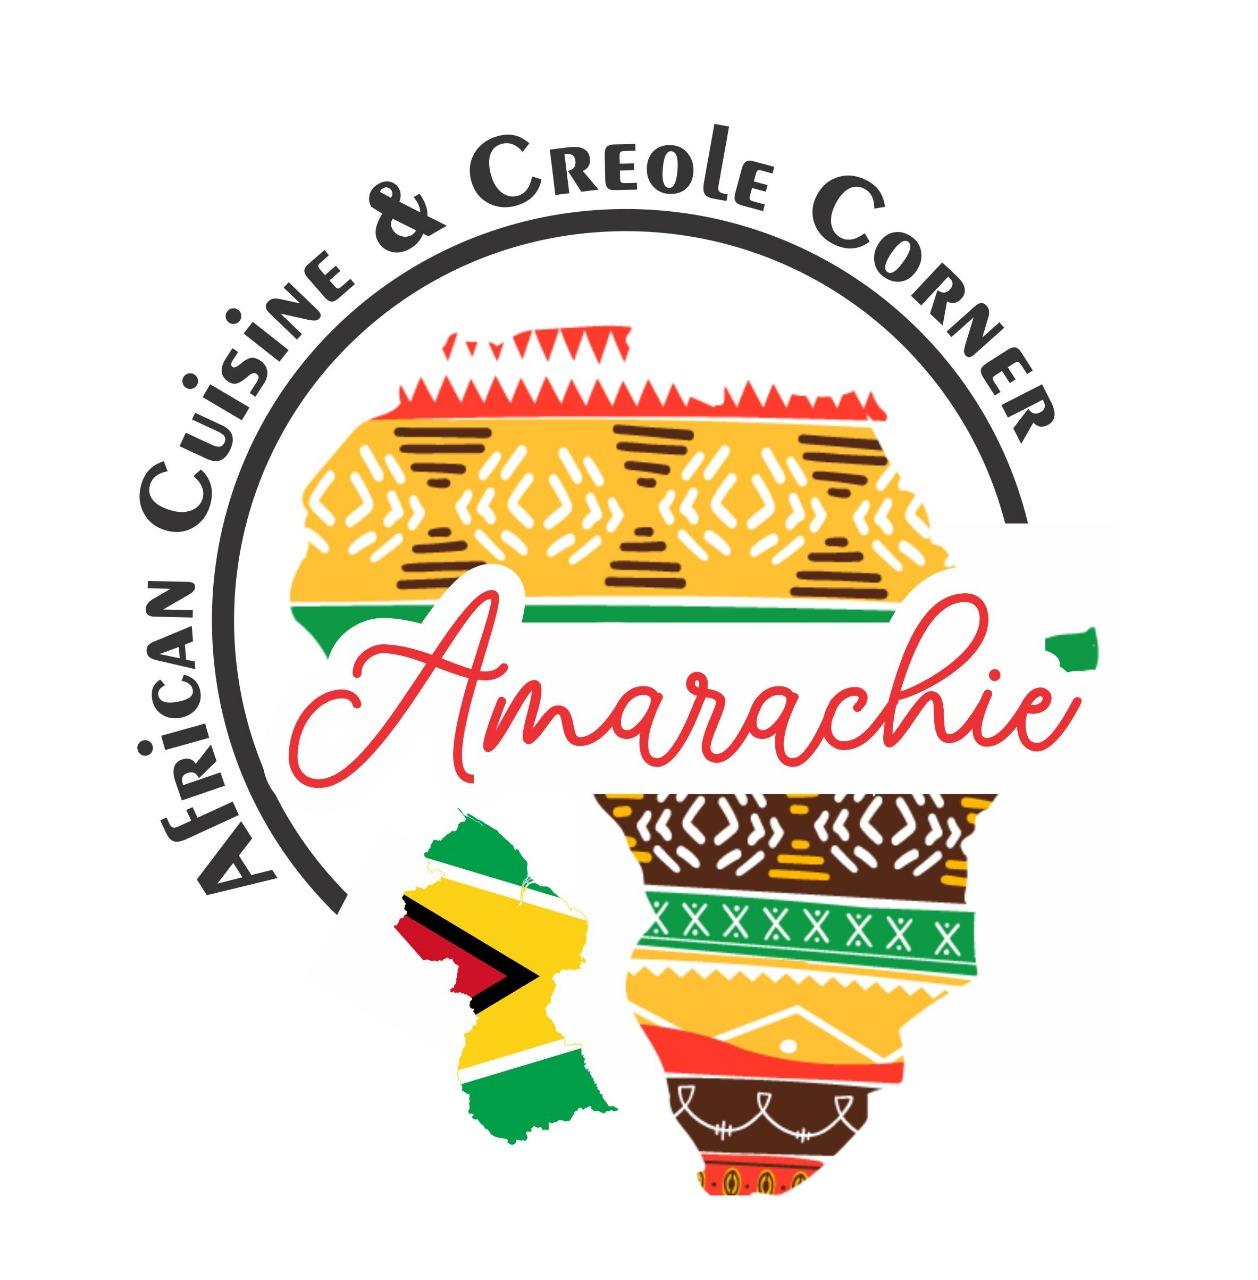 Amarachi African Cuisines & Creole Food